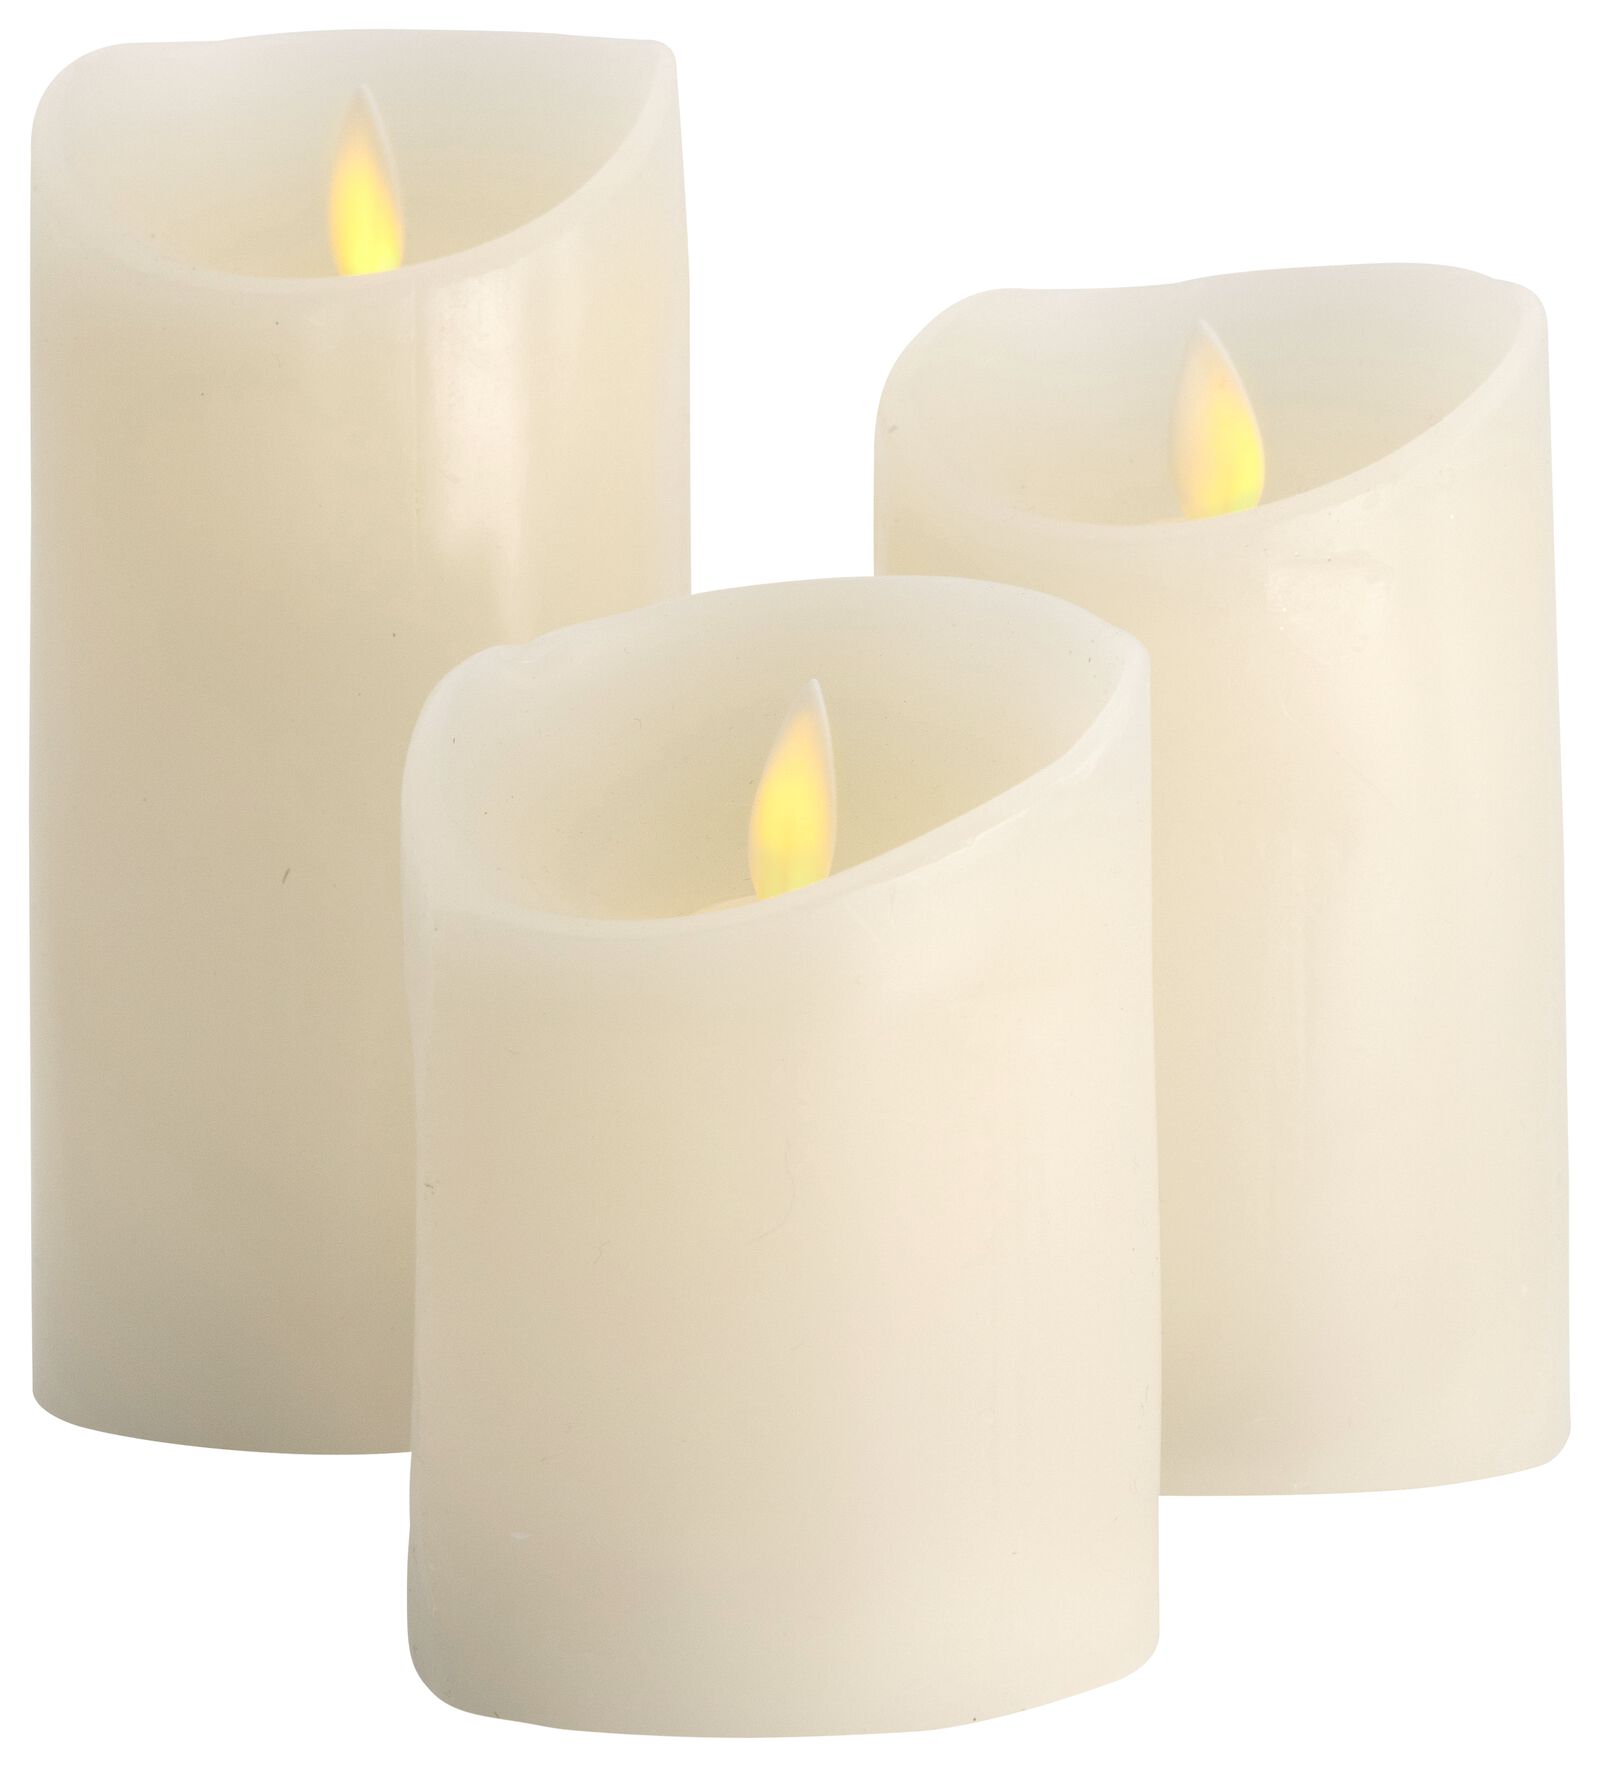 2 bougies flambeaux blanches en cire véritable, flamme vacillante leds